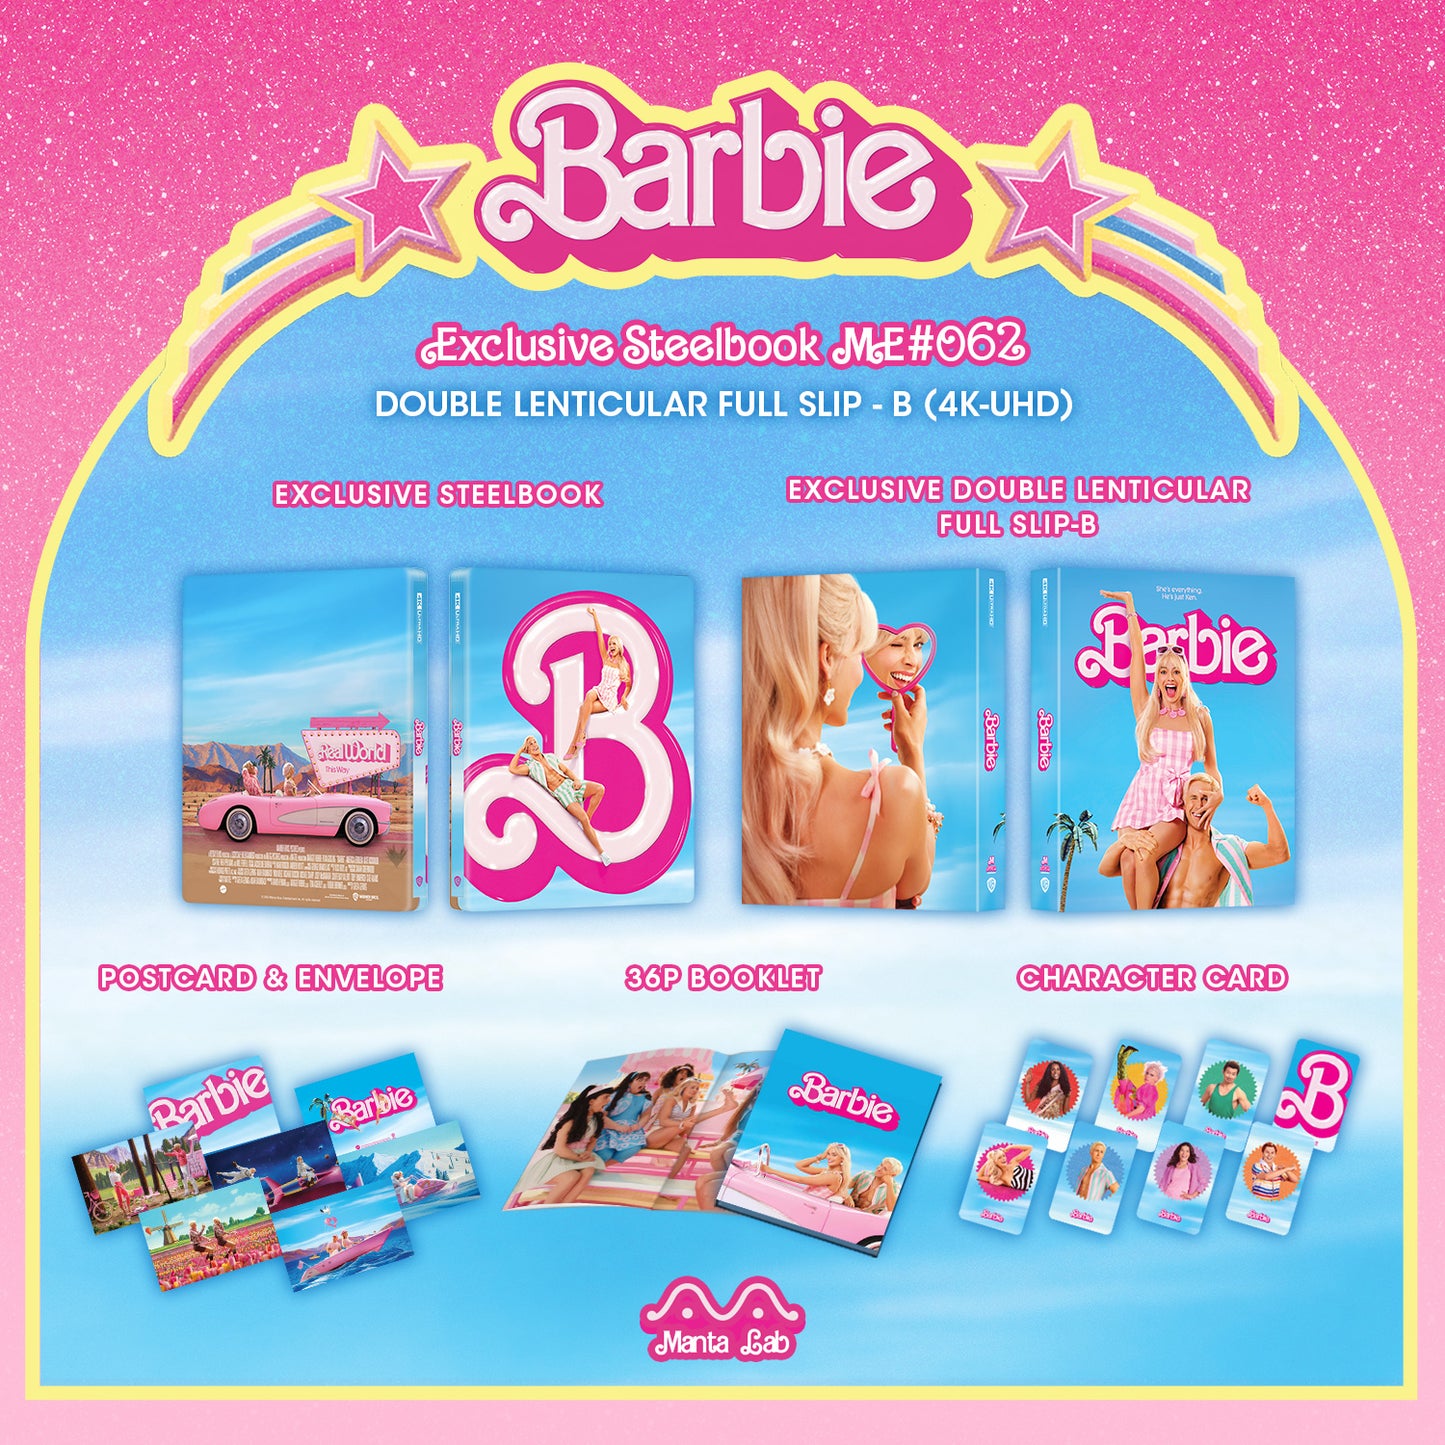 Barbie 4K Double Lentiuclar B SteelBook (ME#62)(Hong Kong)